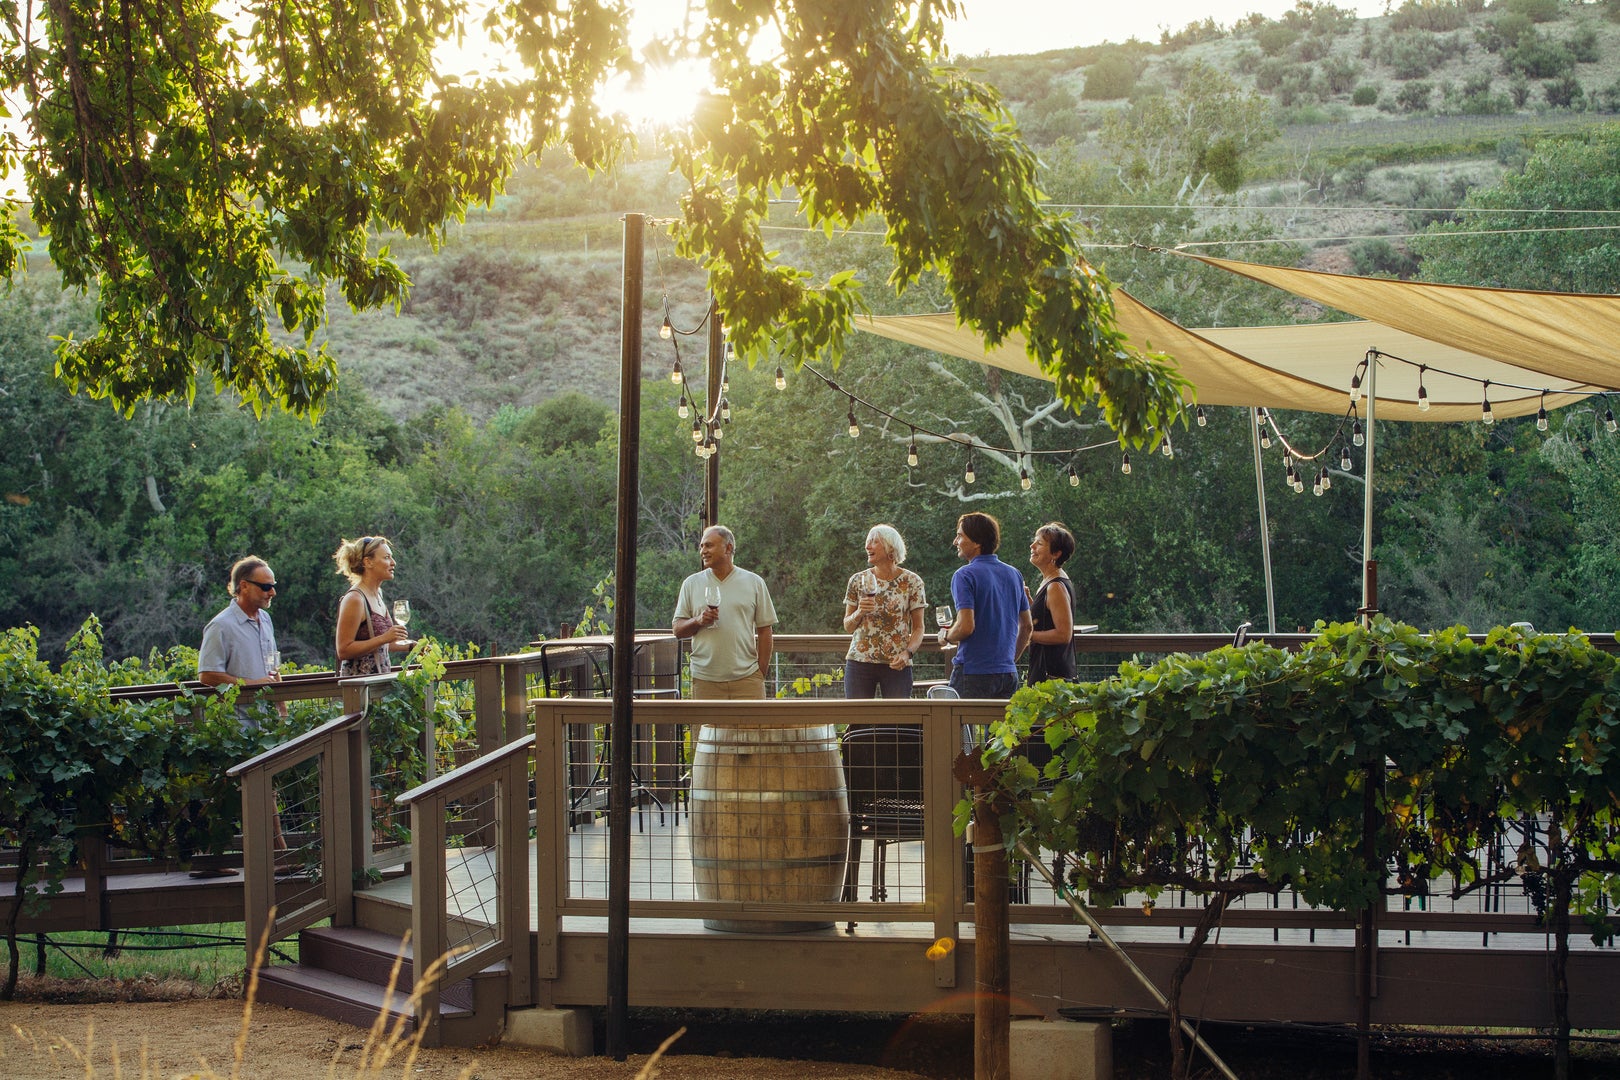 Enjoy a vineyard adventure in Arizona’s must-experience wine country